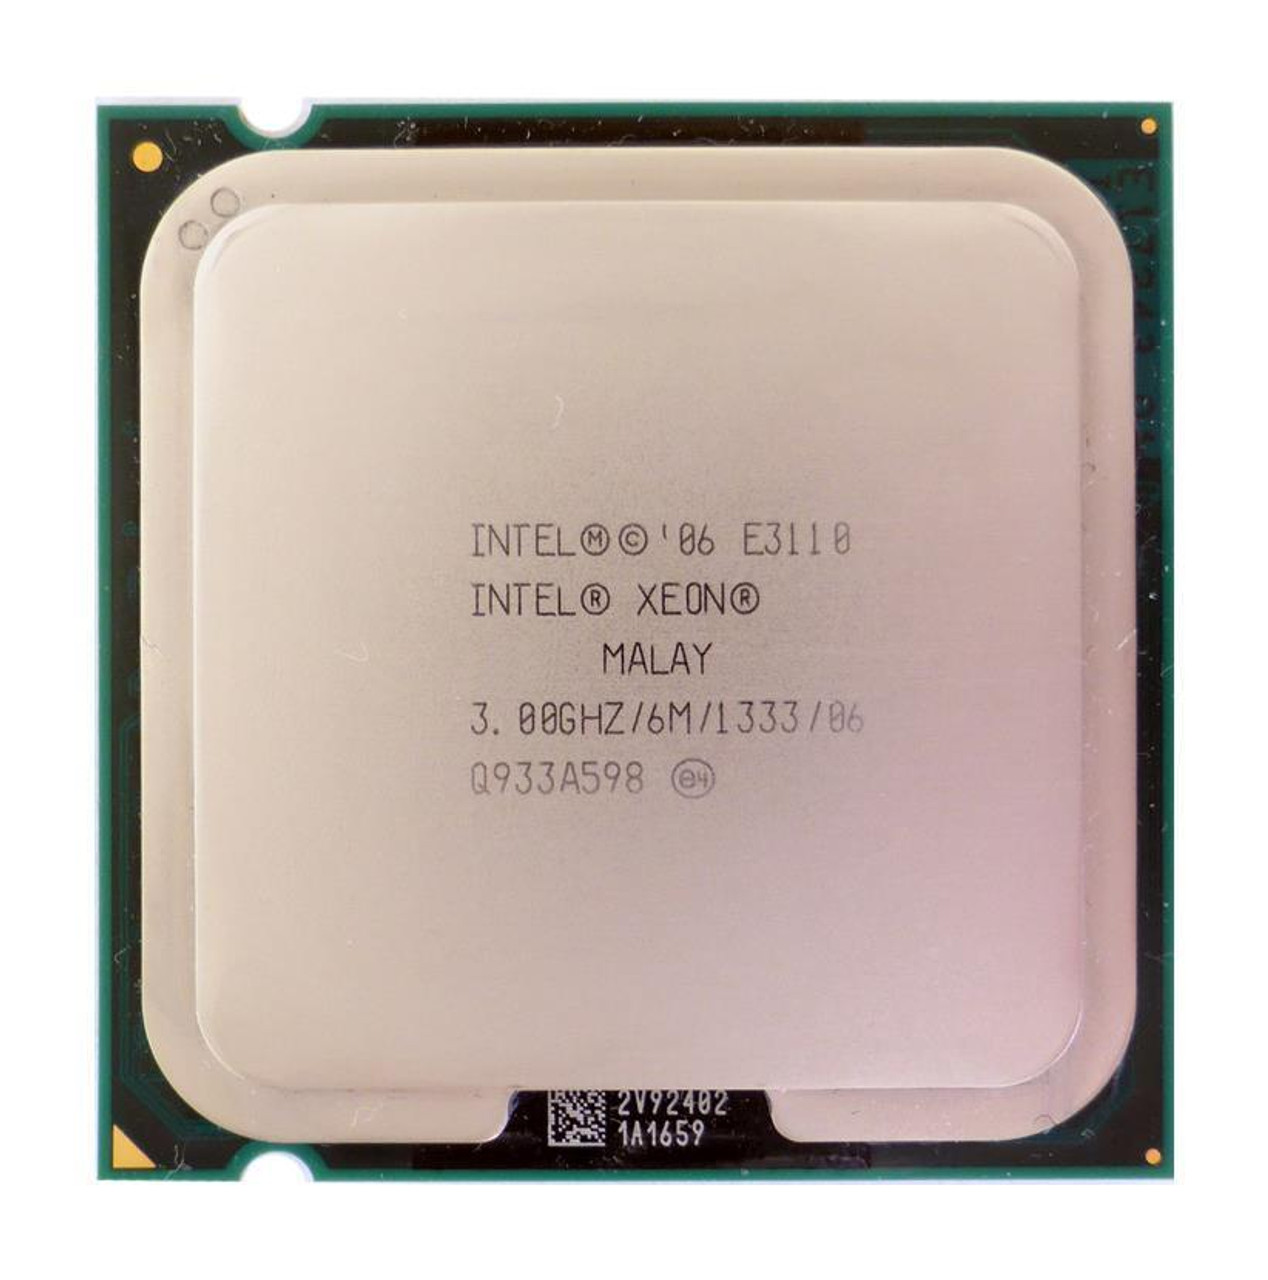 Fujitsu 3.00GHz 1333MHz FSB 6MB L2 Cache Socket LGA775 Intel Xeon E3110 Dual Core Processor Upgrade